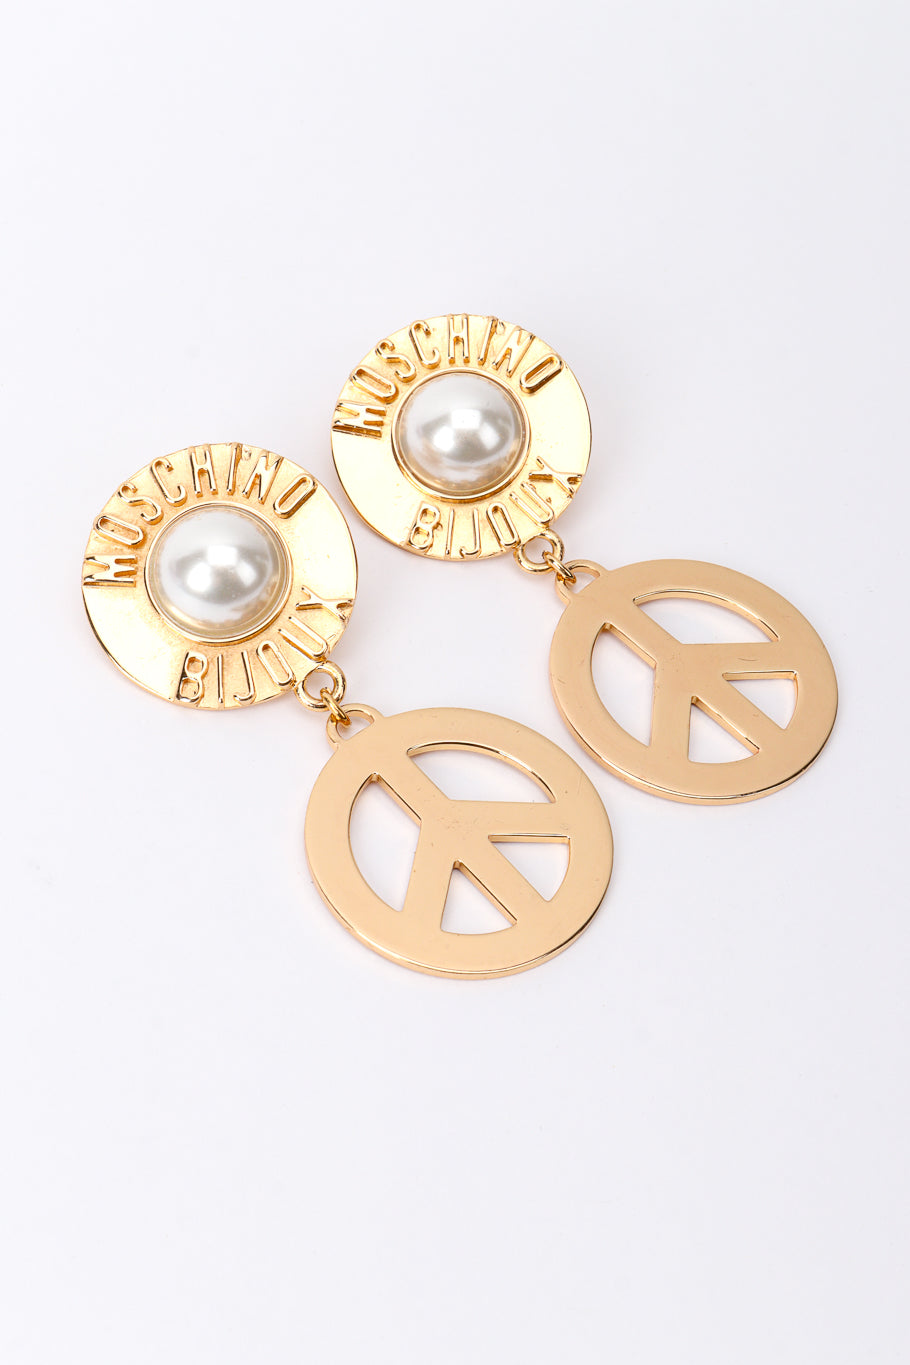 Vintage Moschino Bijoux Peace Drop Earrings front @recess la